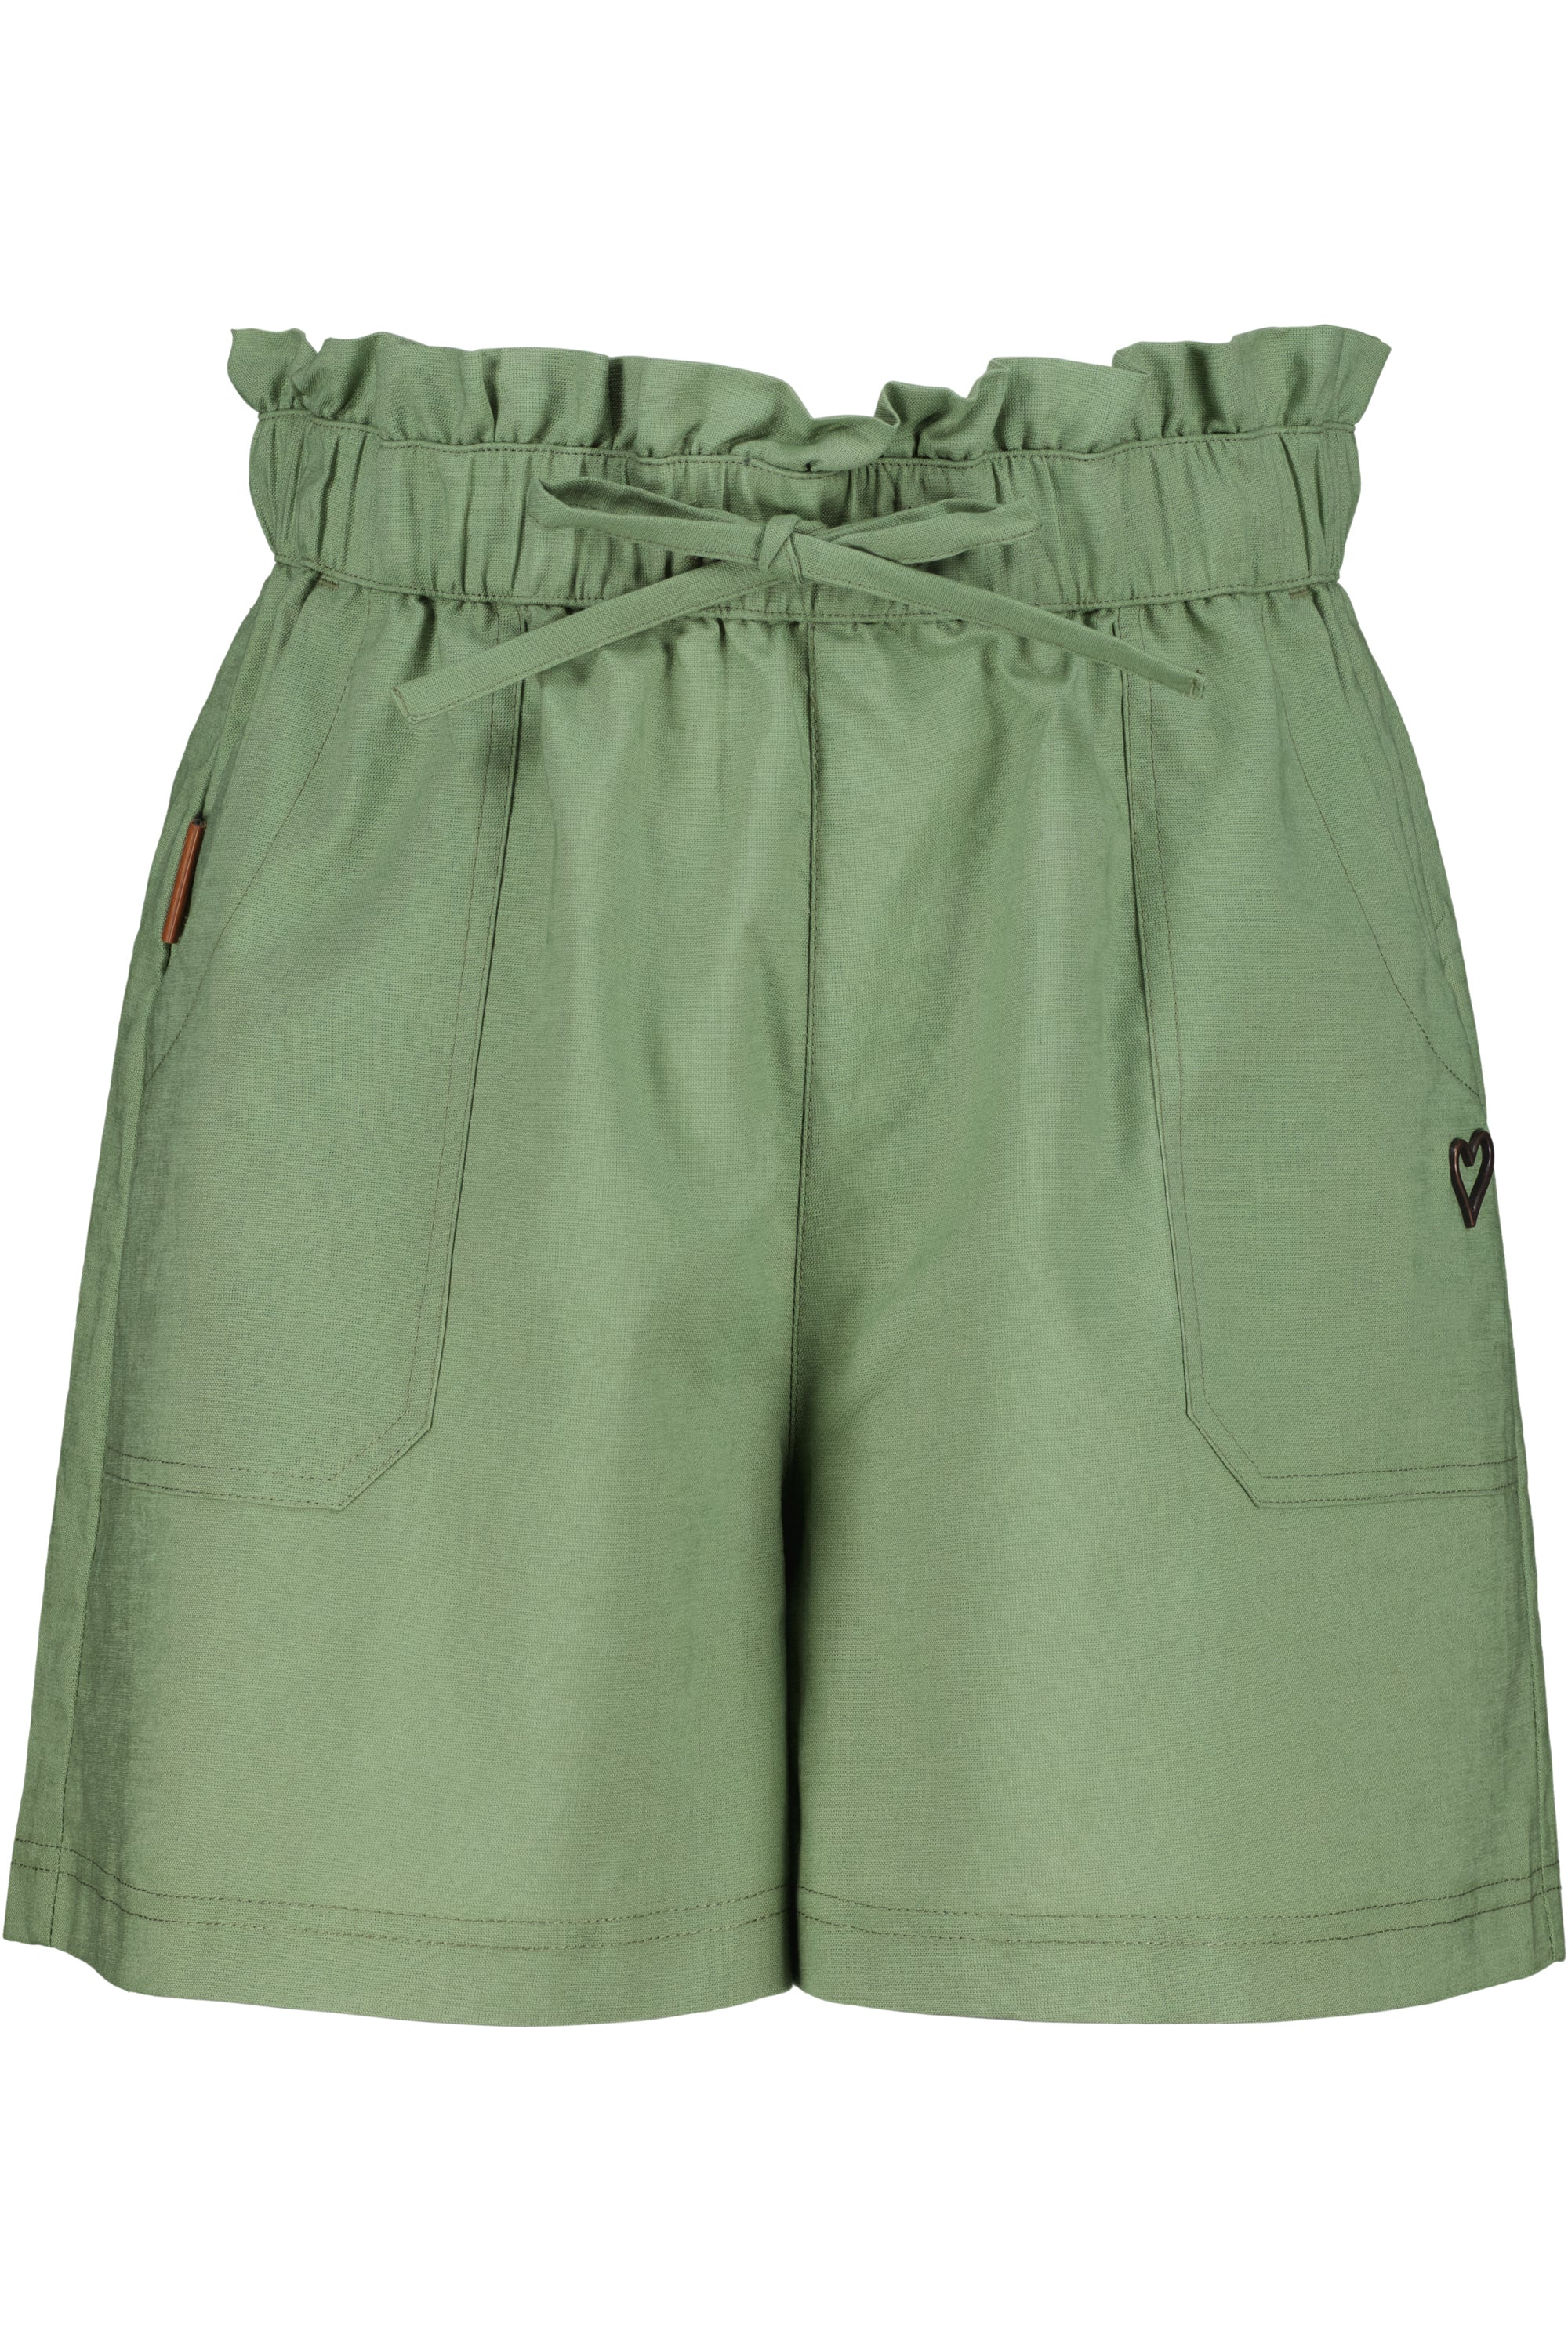 Entspannter Urlaubs-Look - BeccaAK B kurzen Hose für Damen Grün